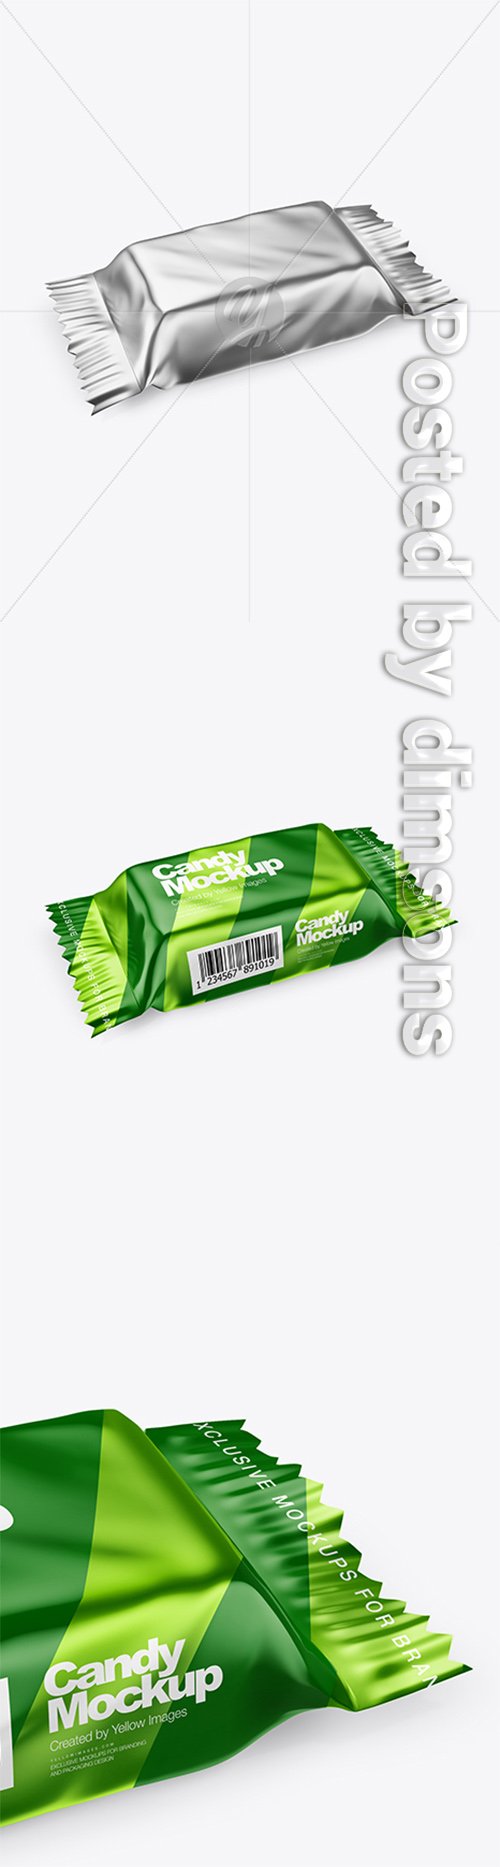 Metallic Candy Package Mockup - Half Side View 30122 TIF